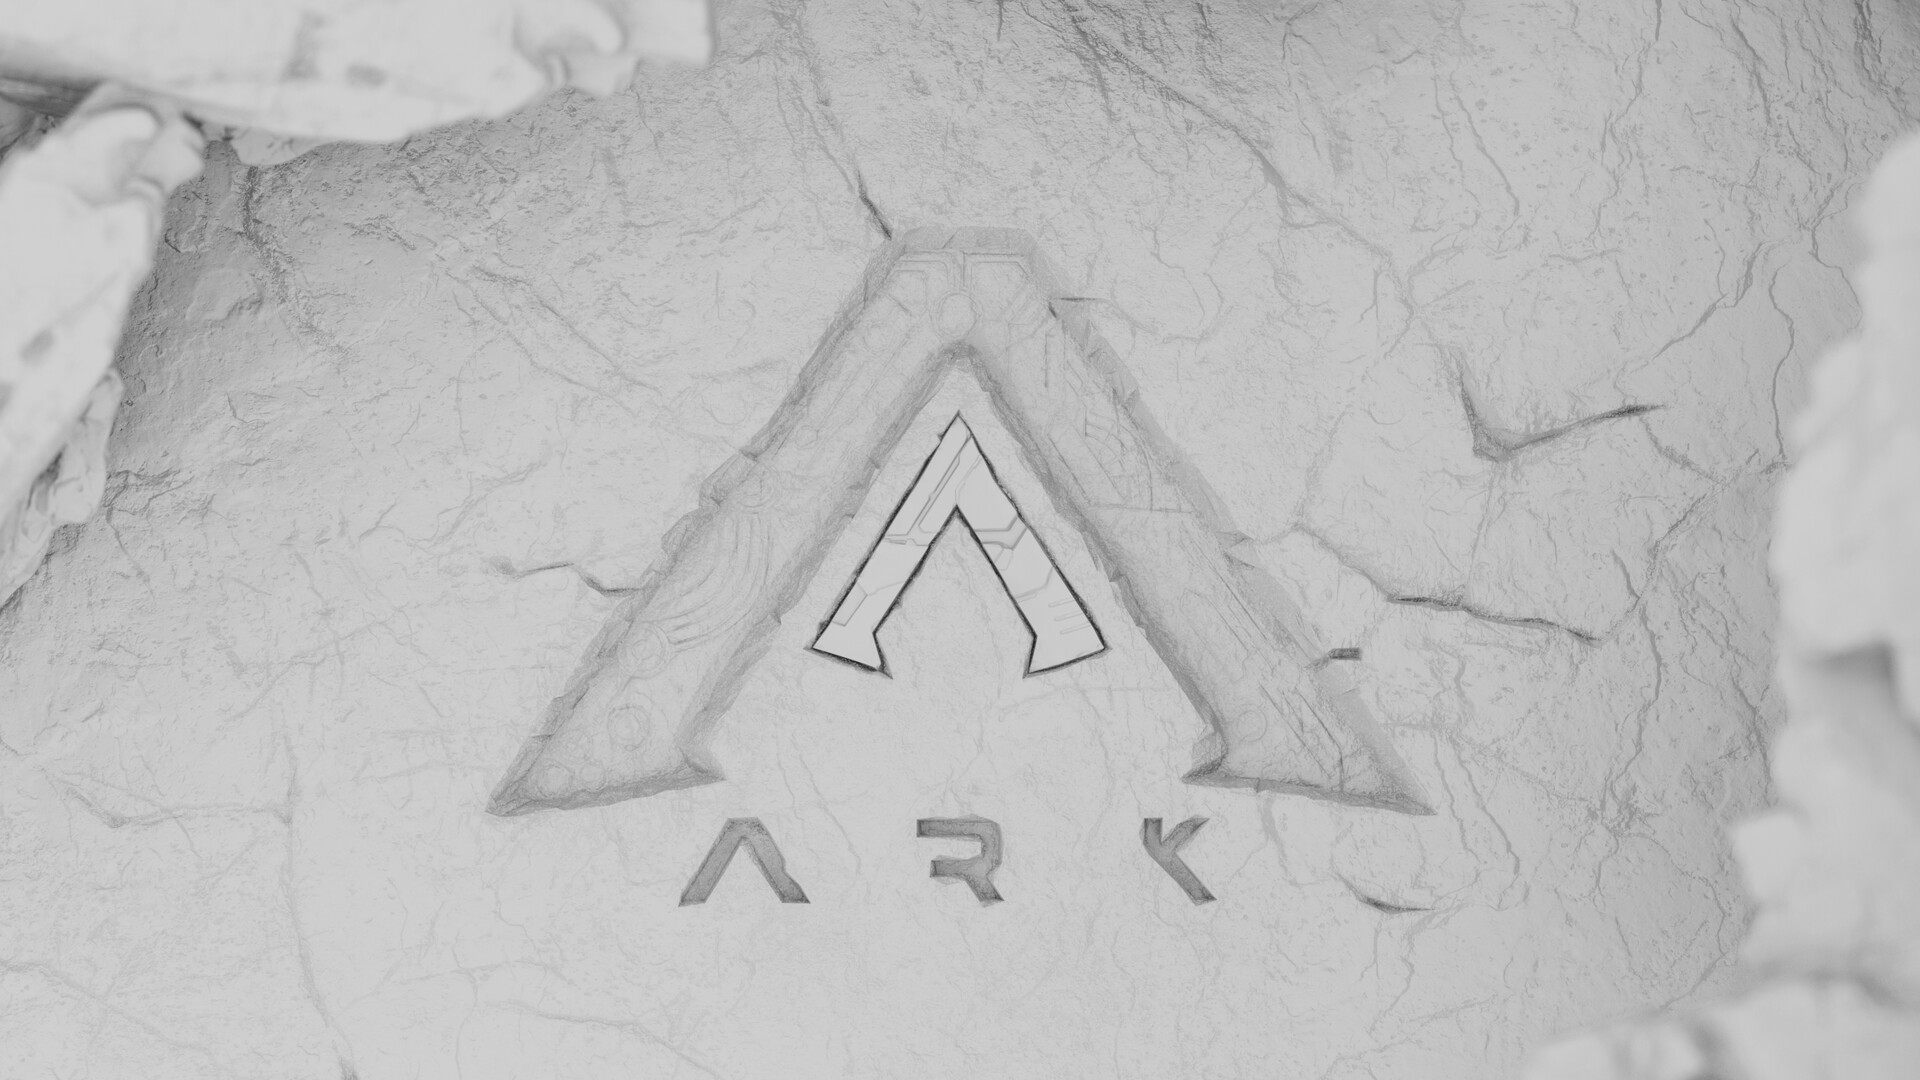 ArtStation - ARK Gen2 Main Menu & ARK II Teaser Image